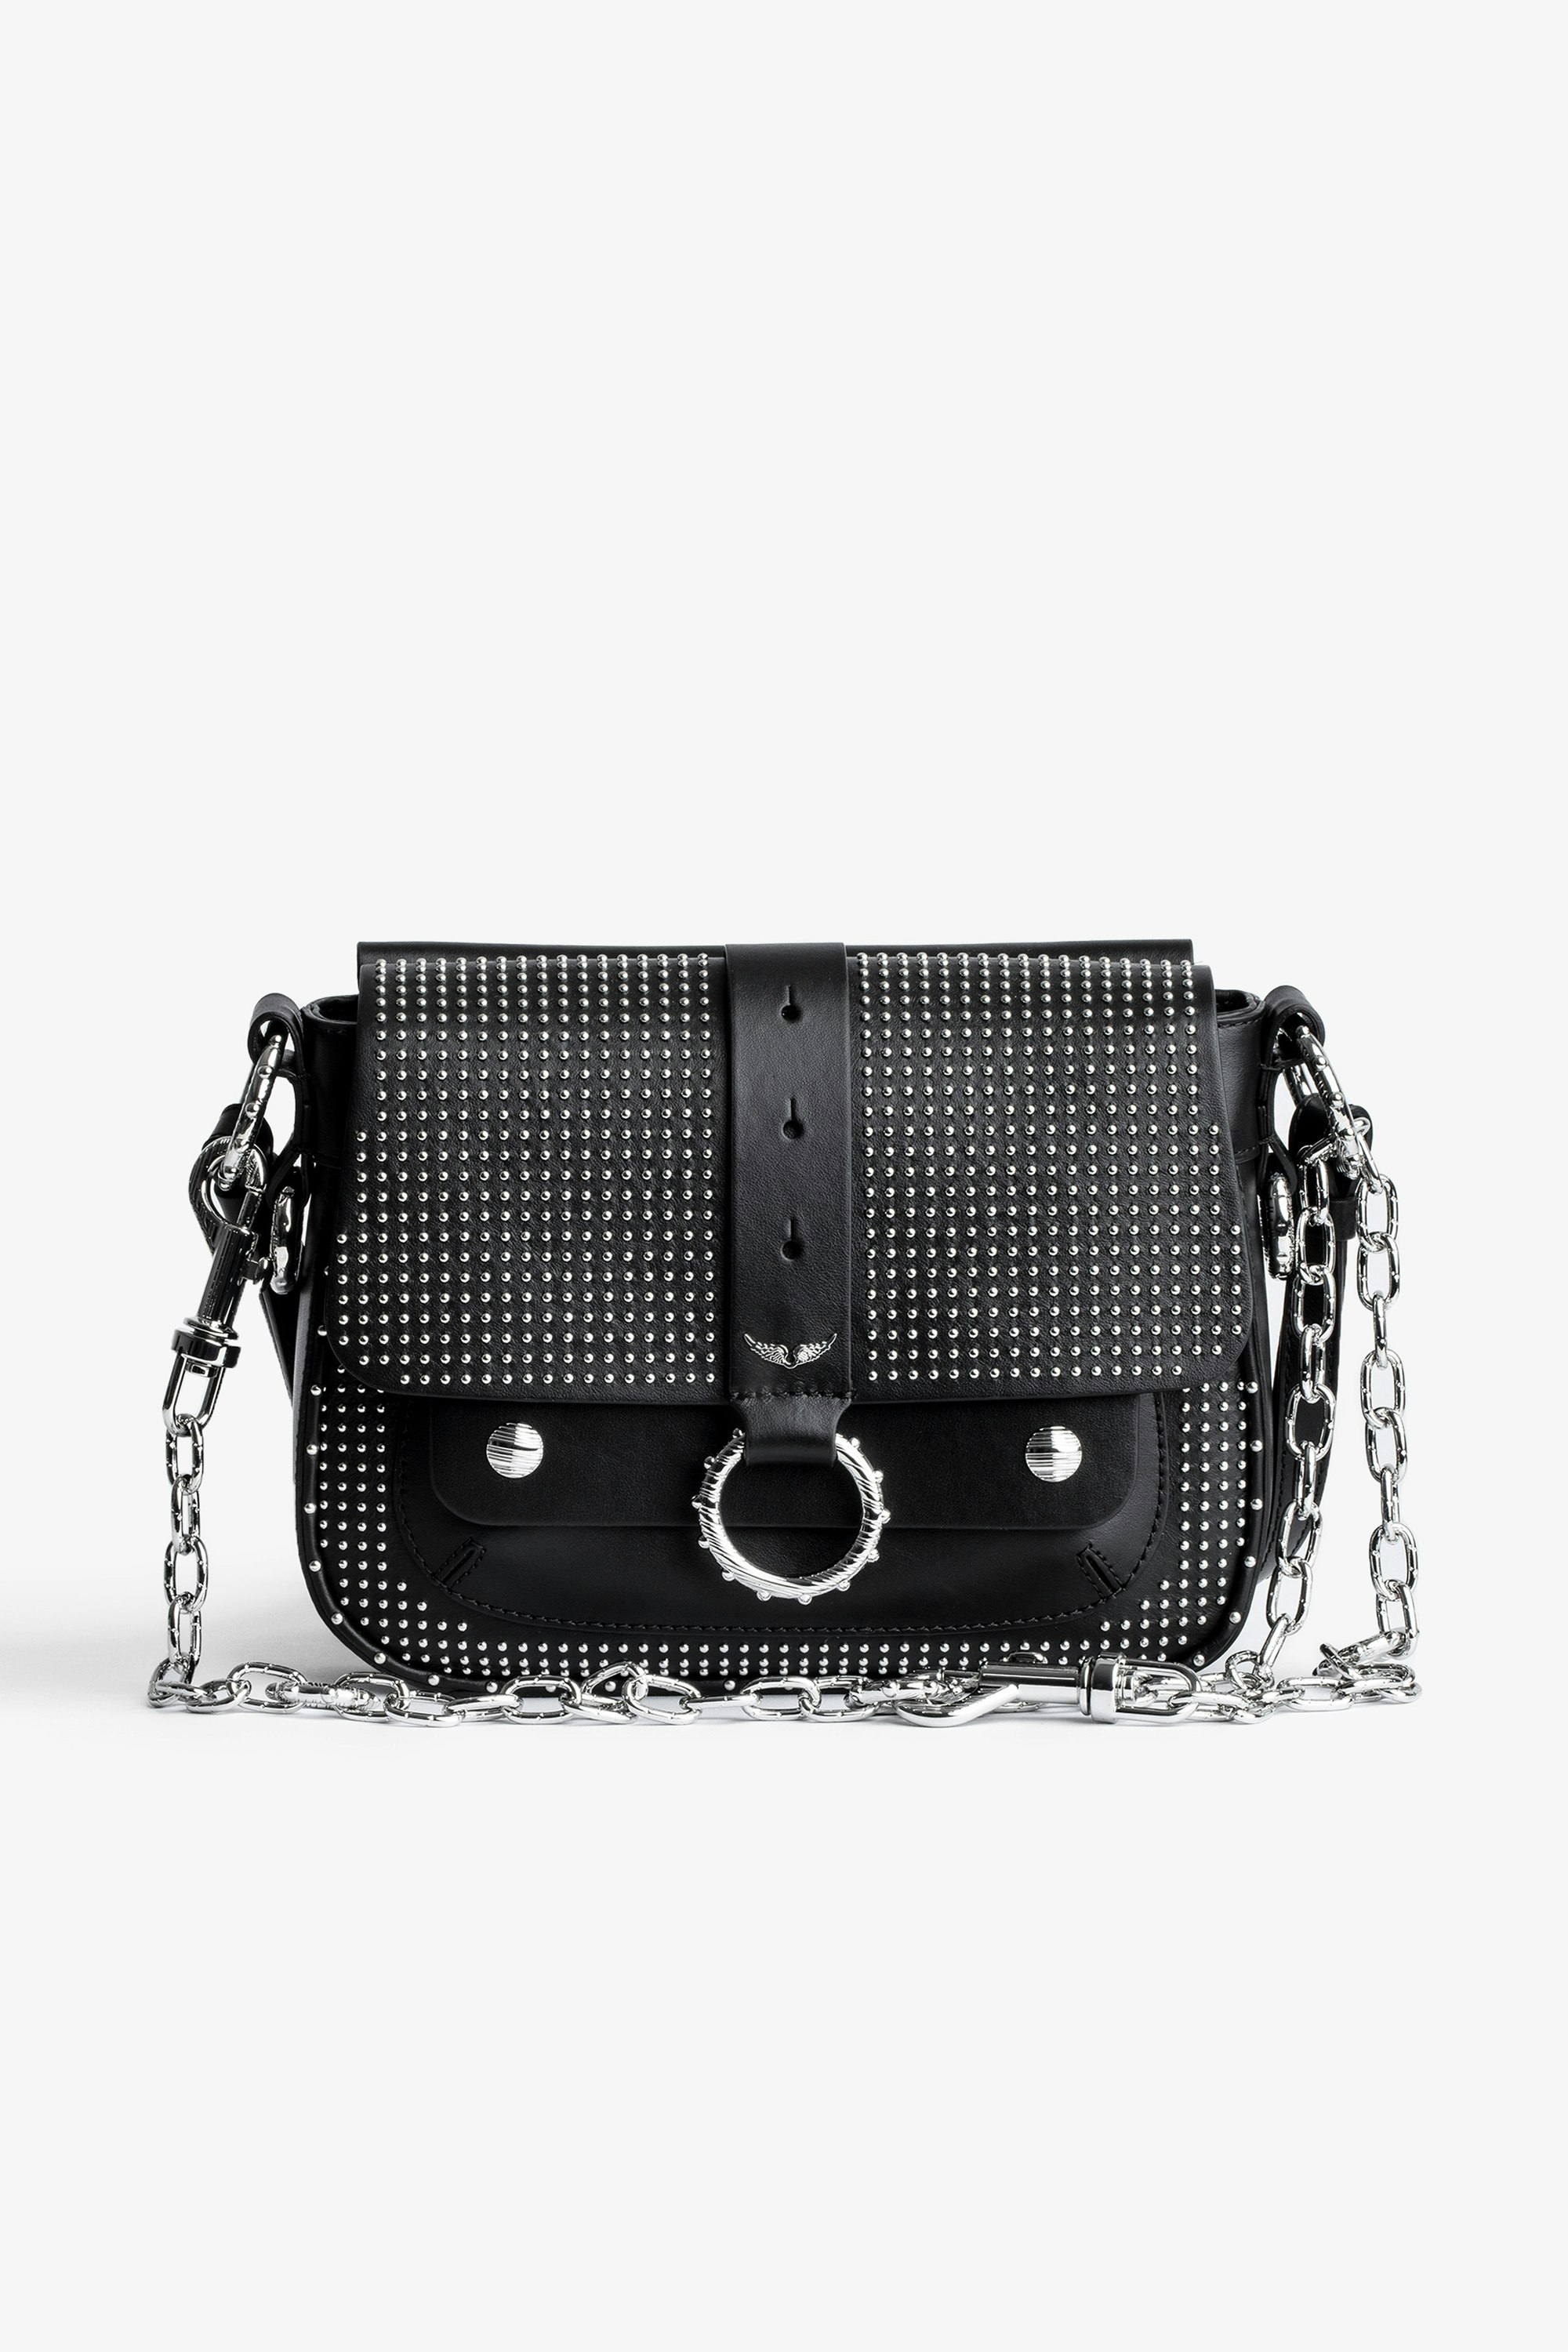 Kate Bag Women’s black leather bag with flap, studs and adjustable shoulder strap